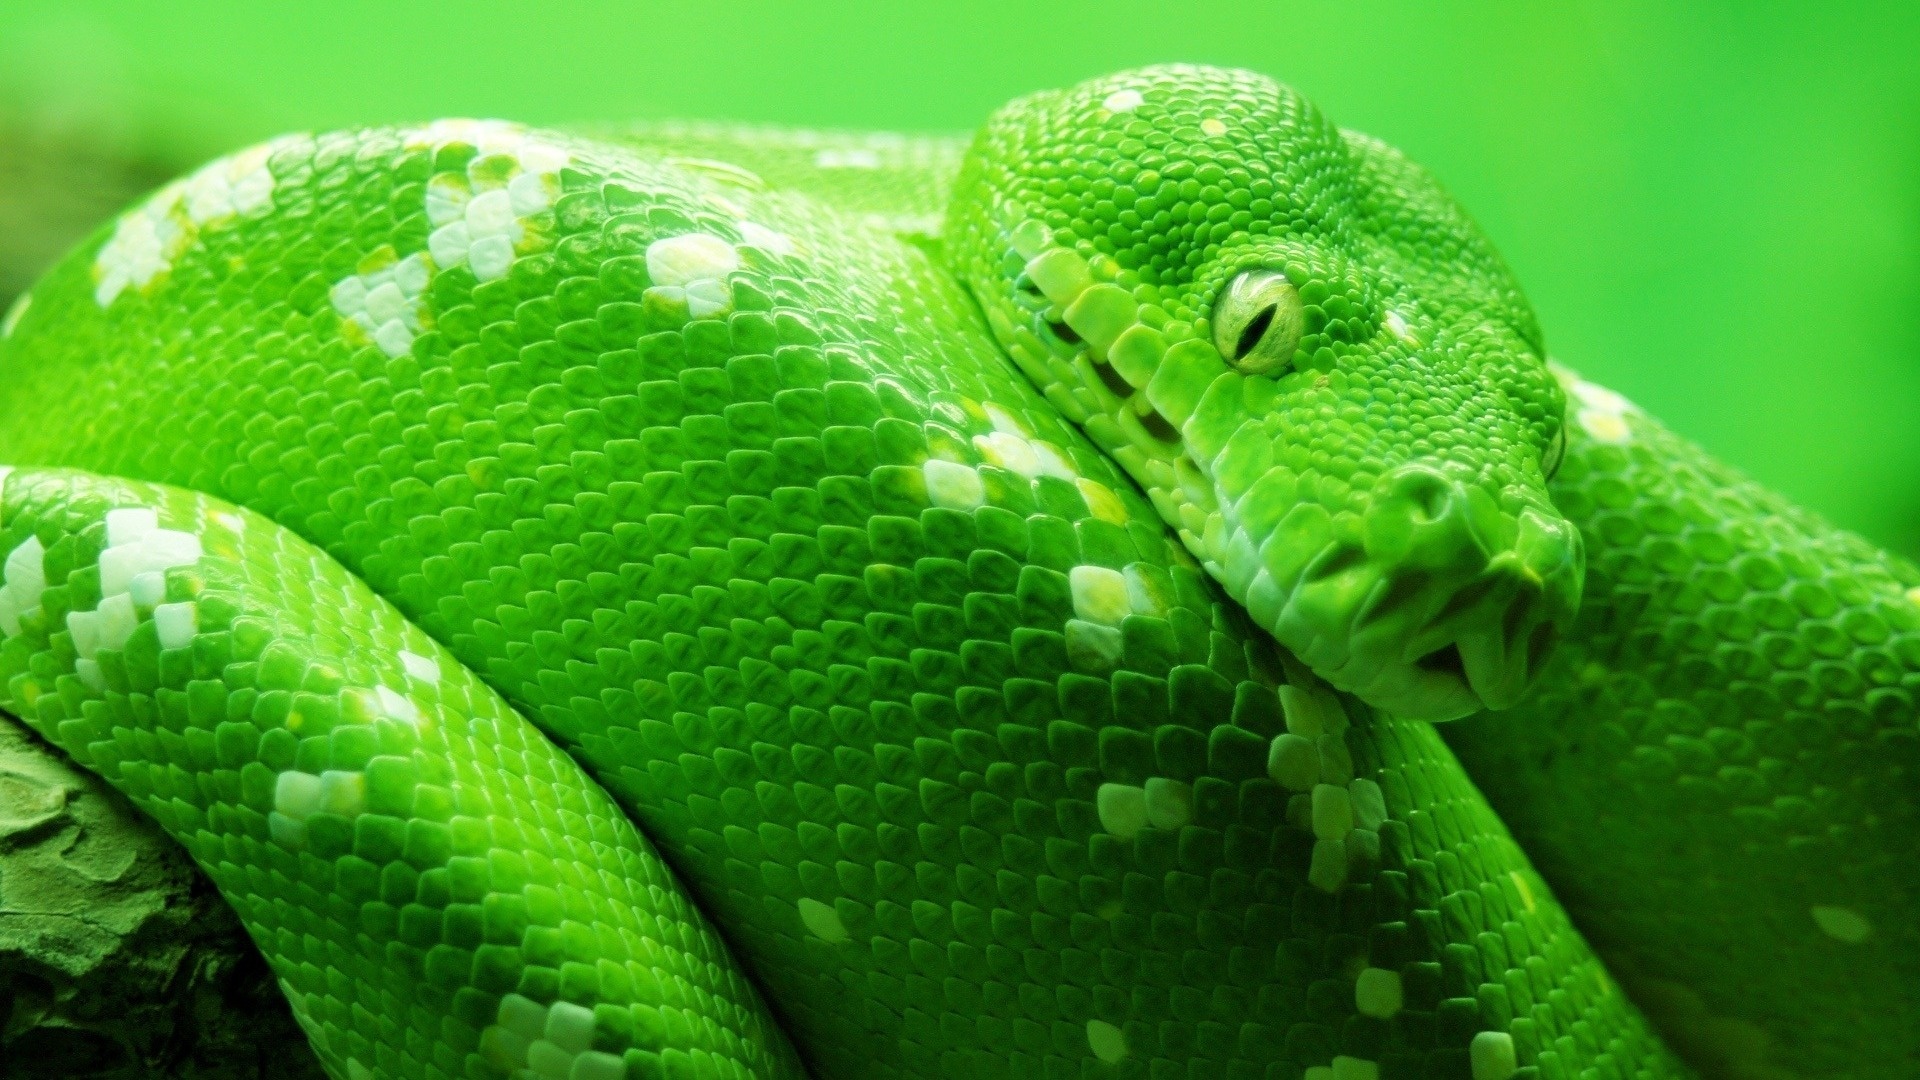 Cool Hd Green Snake Wallpaper Download cool HD